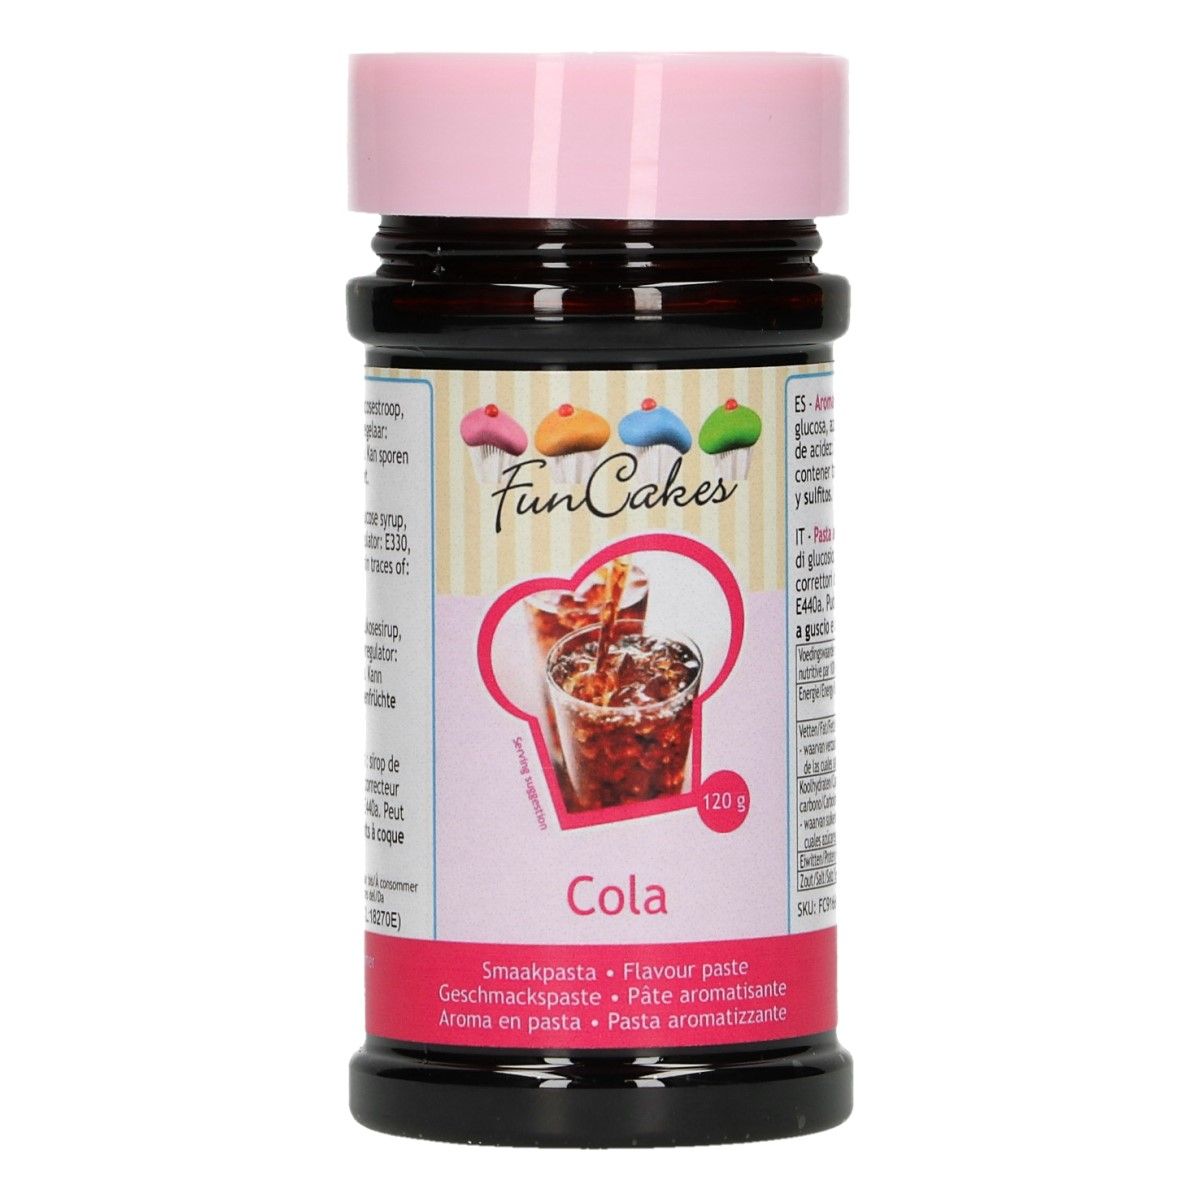 pate aromatisante coca cola